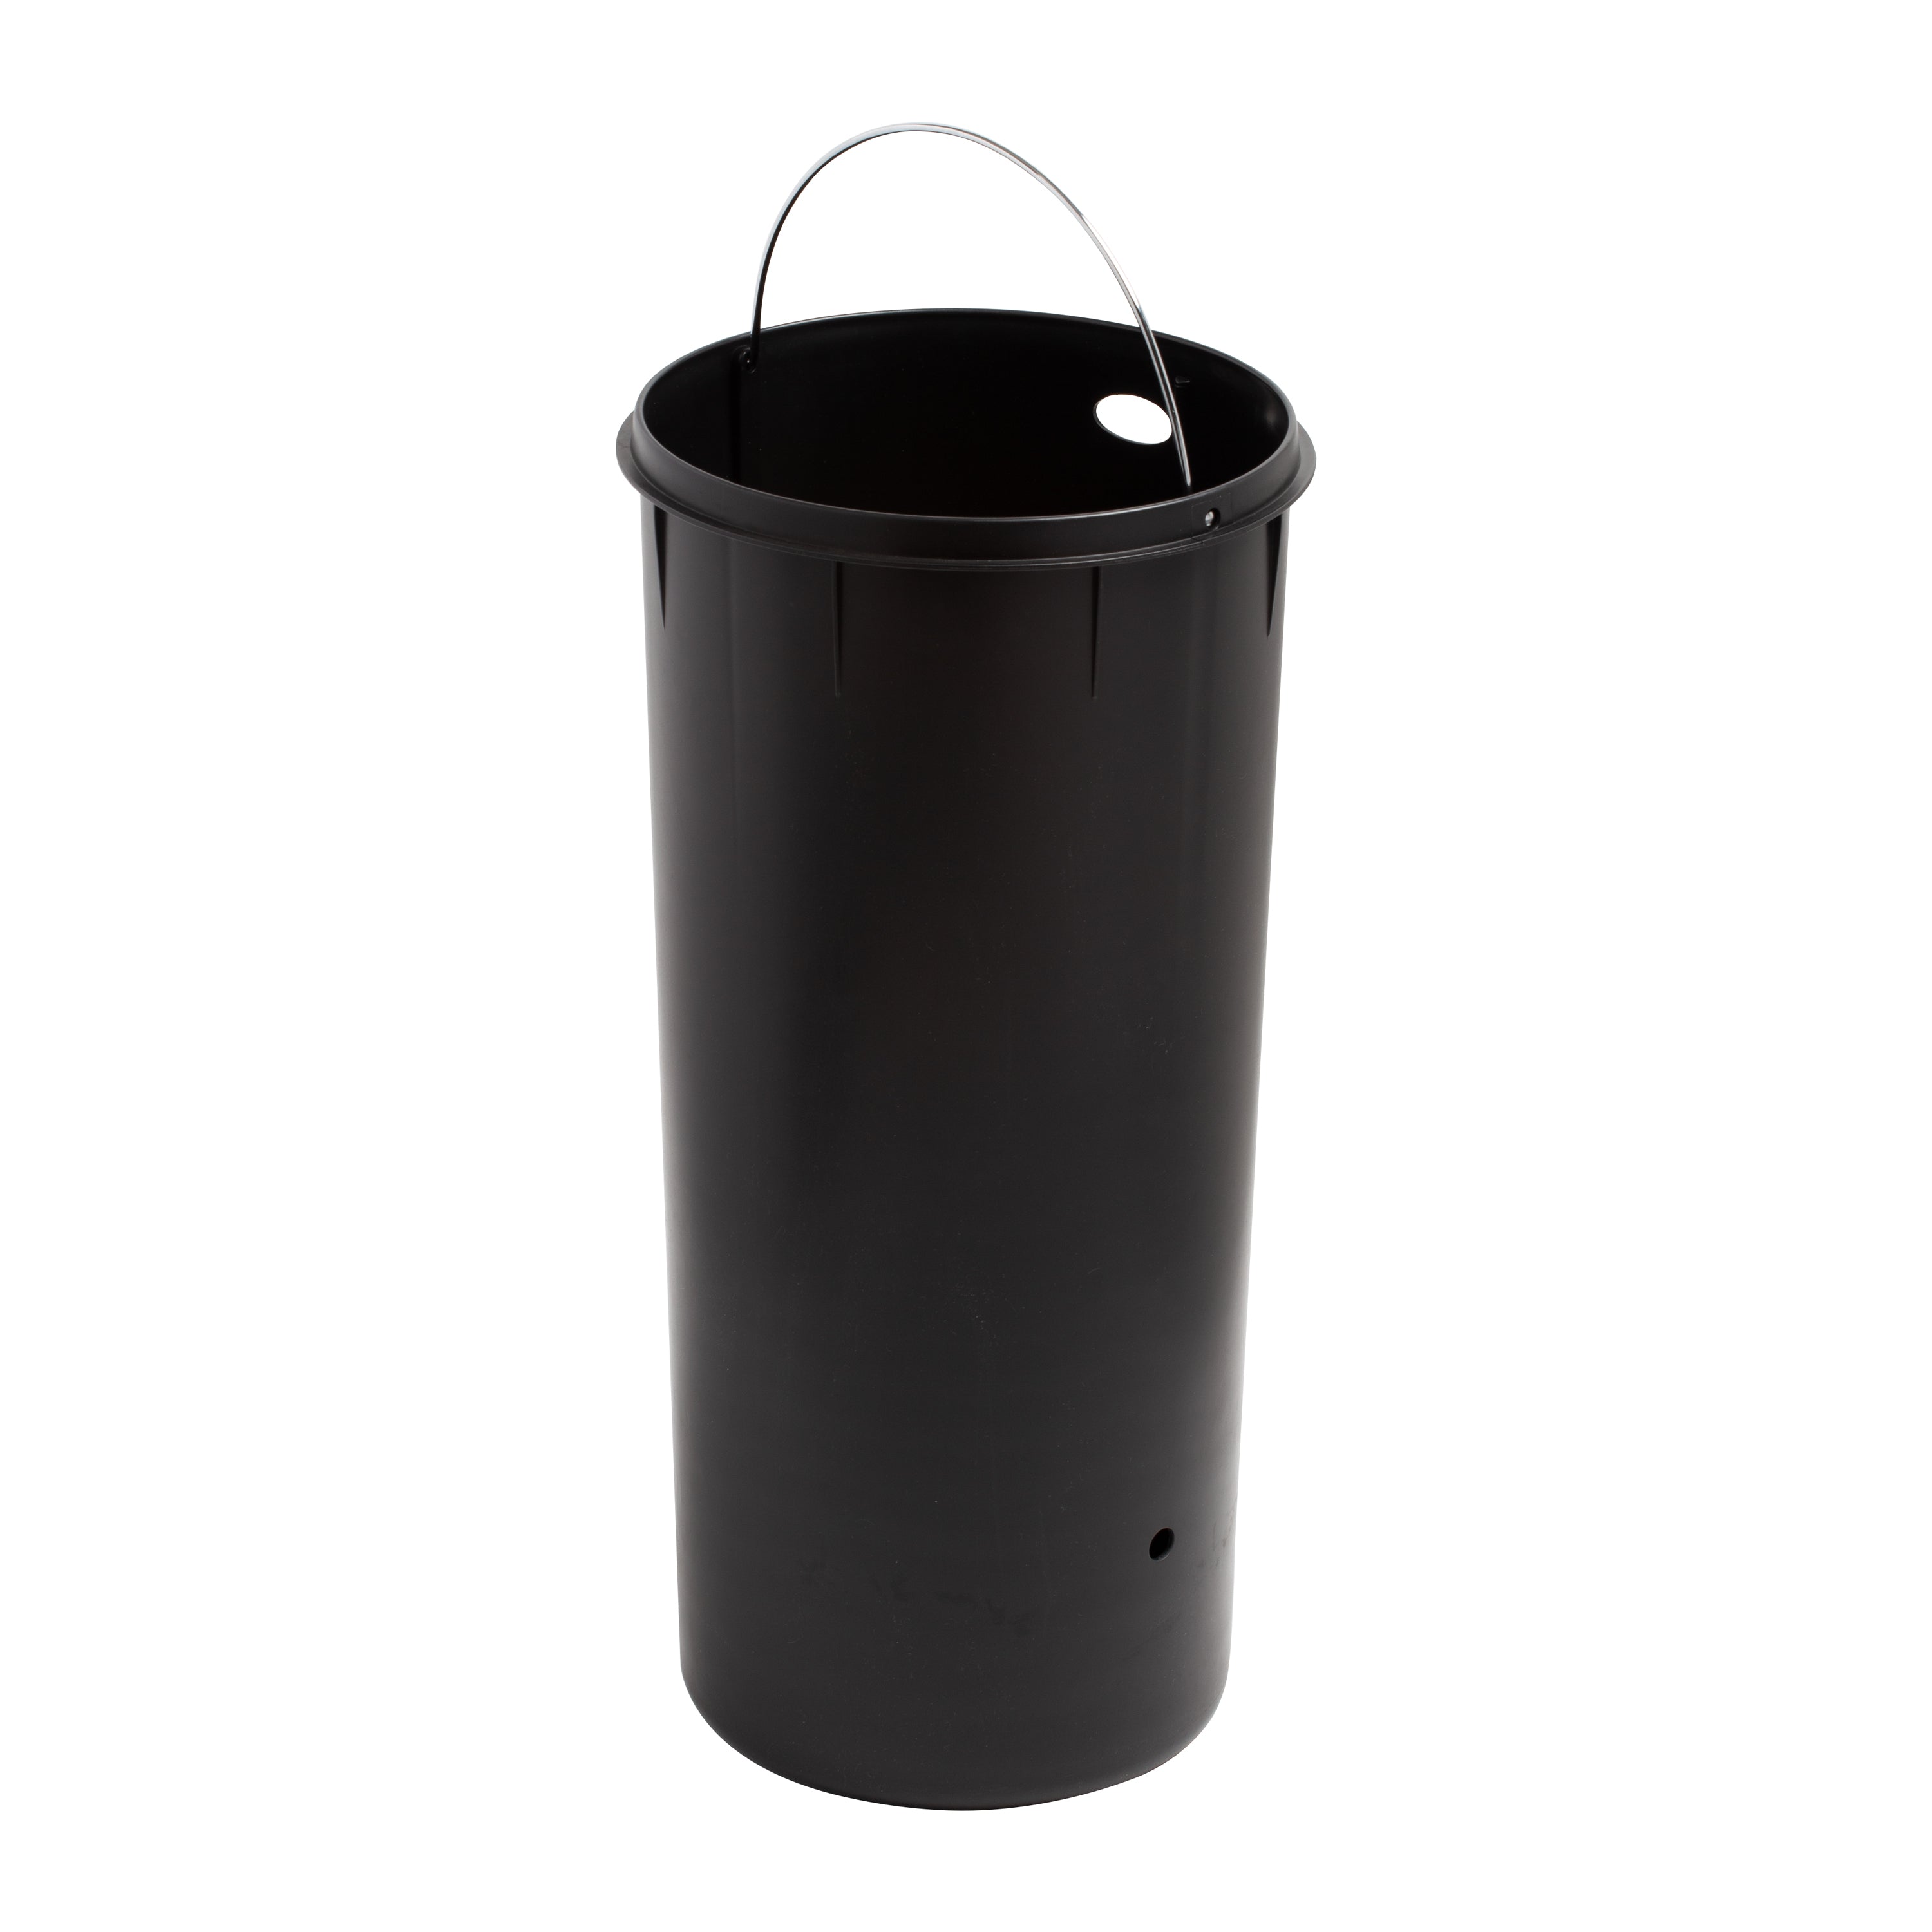 Glaro S1230SA New Yorker Self-Closing Dome Top Trash Can, 12 x 30, 8 Gallon  - Satin Aluminum